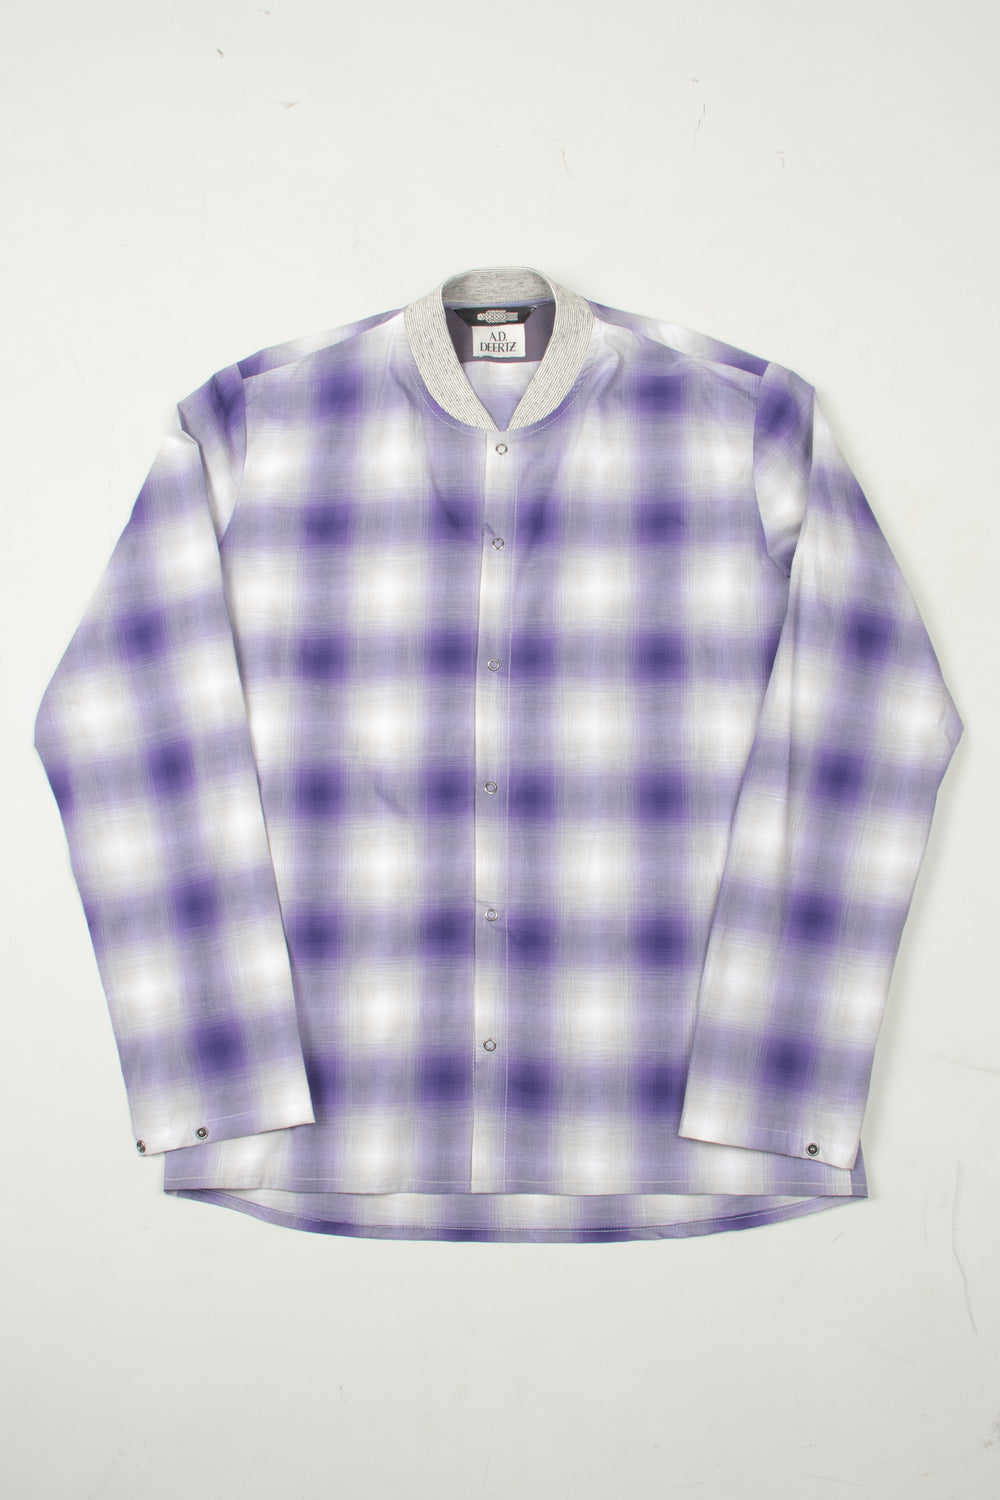 Katta Shirt grey-purple